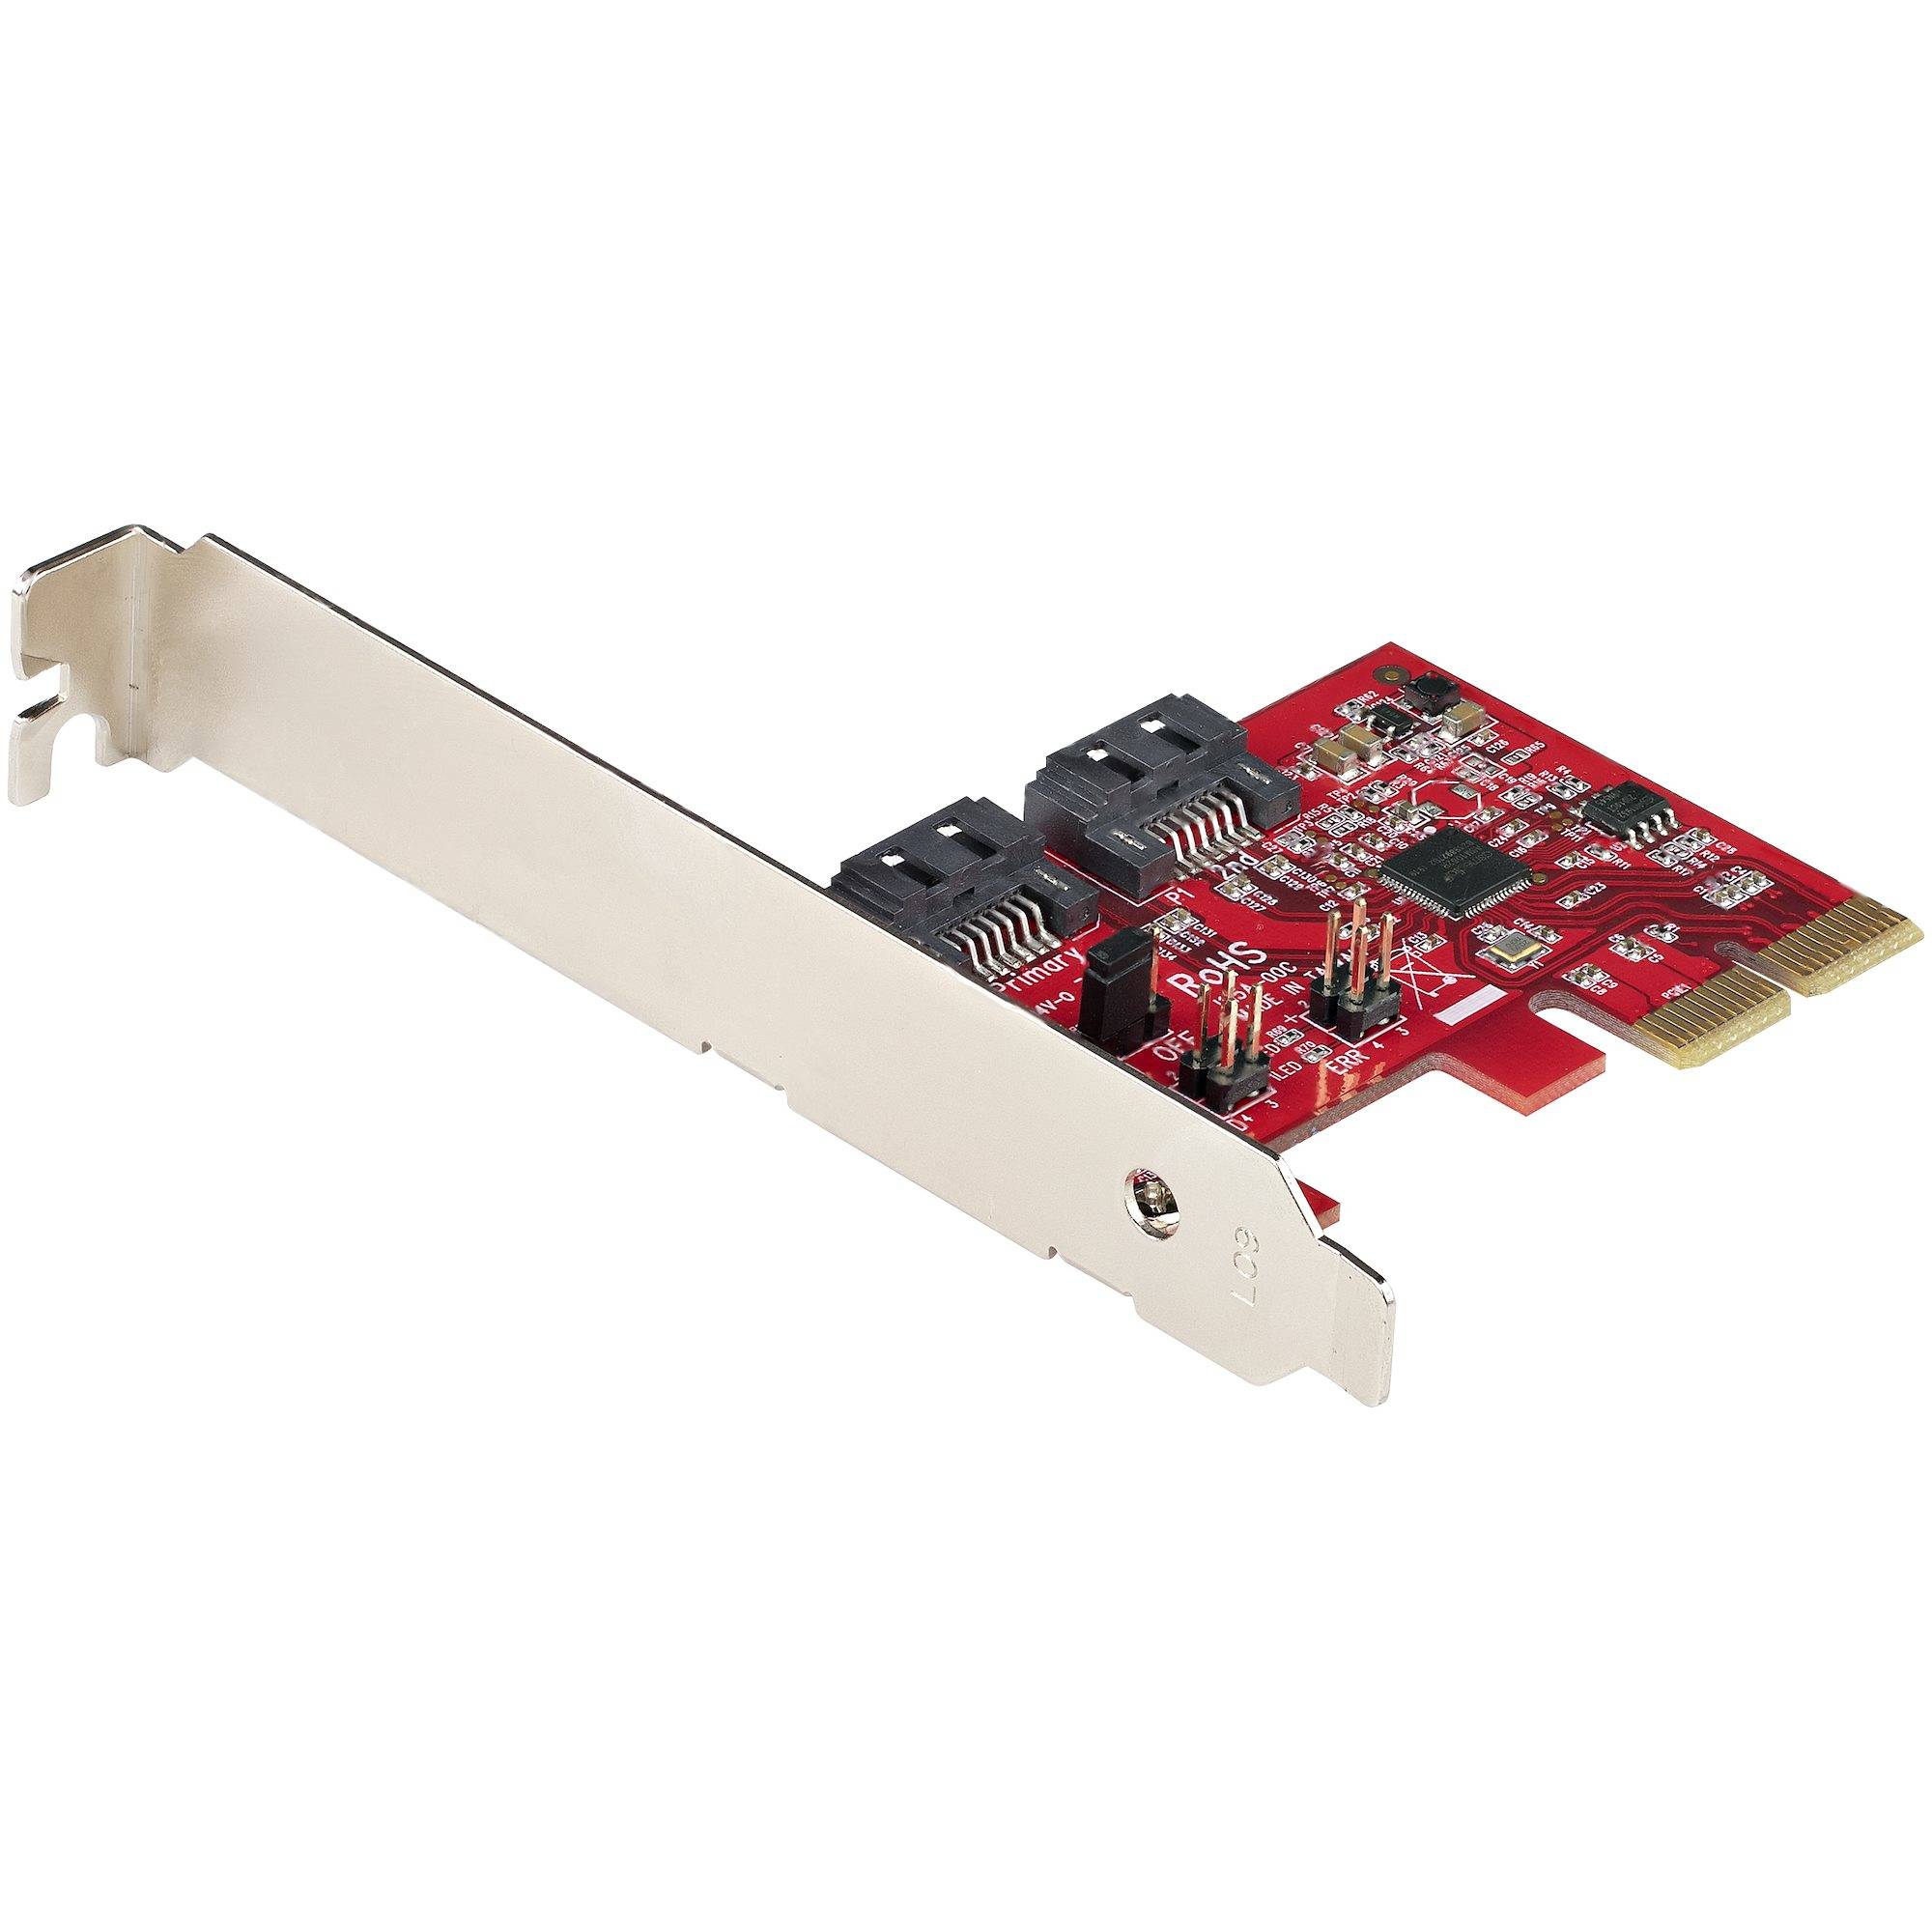 Rca Informatique - Image du produit : CARTE PCI EXPRESS SATA 2 PORTS (6GBPS) - ASM1166 SATA-RAID